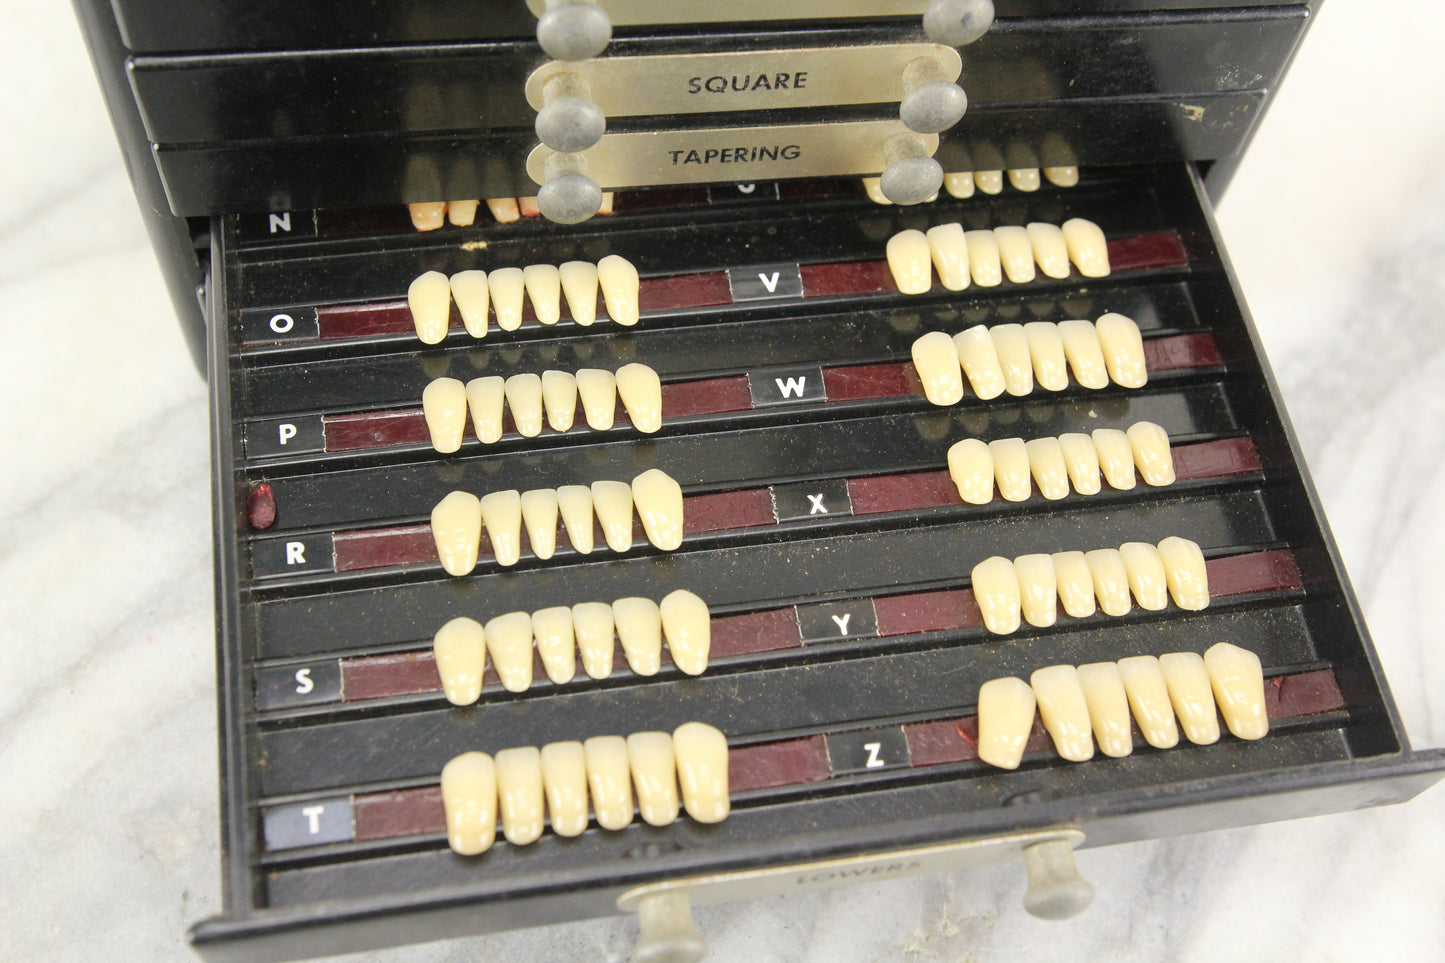 The Dentists' Supply Co. of New York Bioform False Teeth Bakelite Cabinet